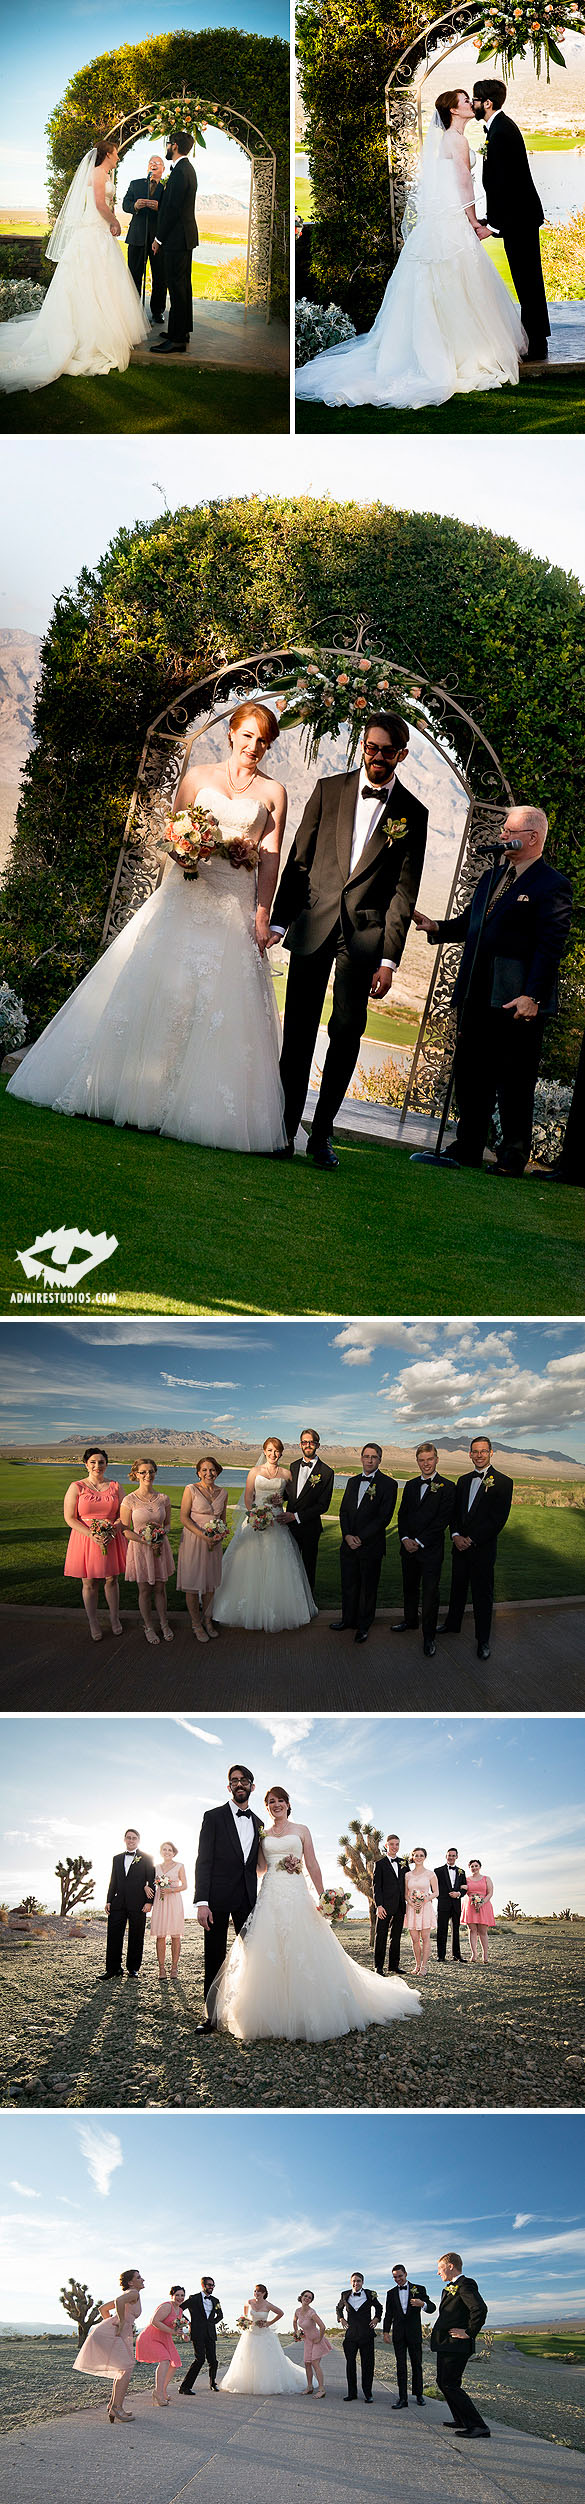 Patrick & Lindsay Country Club Wedding - Las Vegas, Nevada